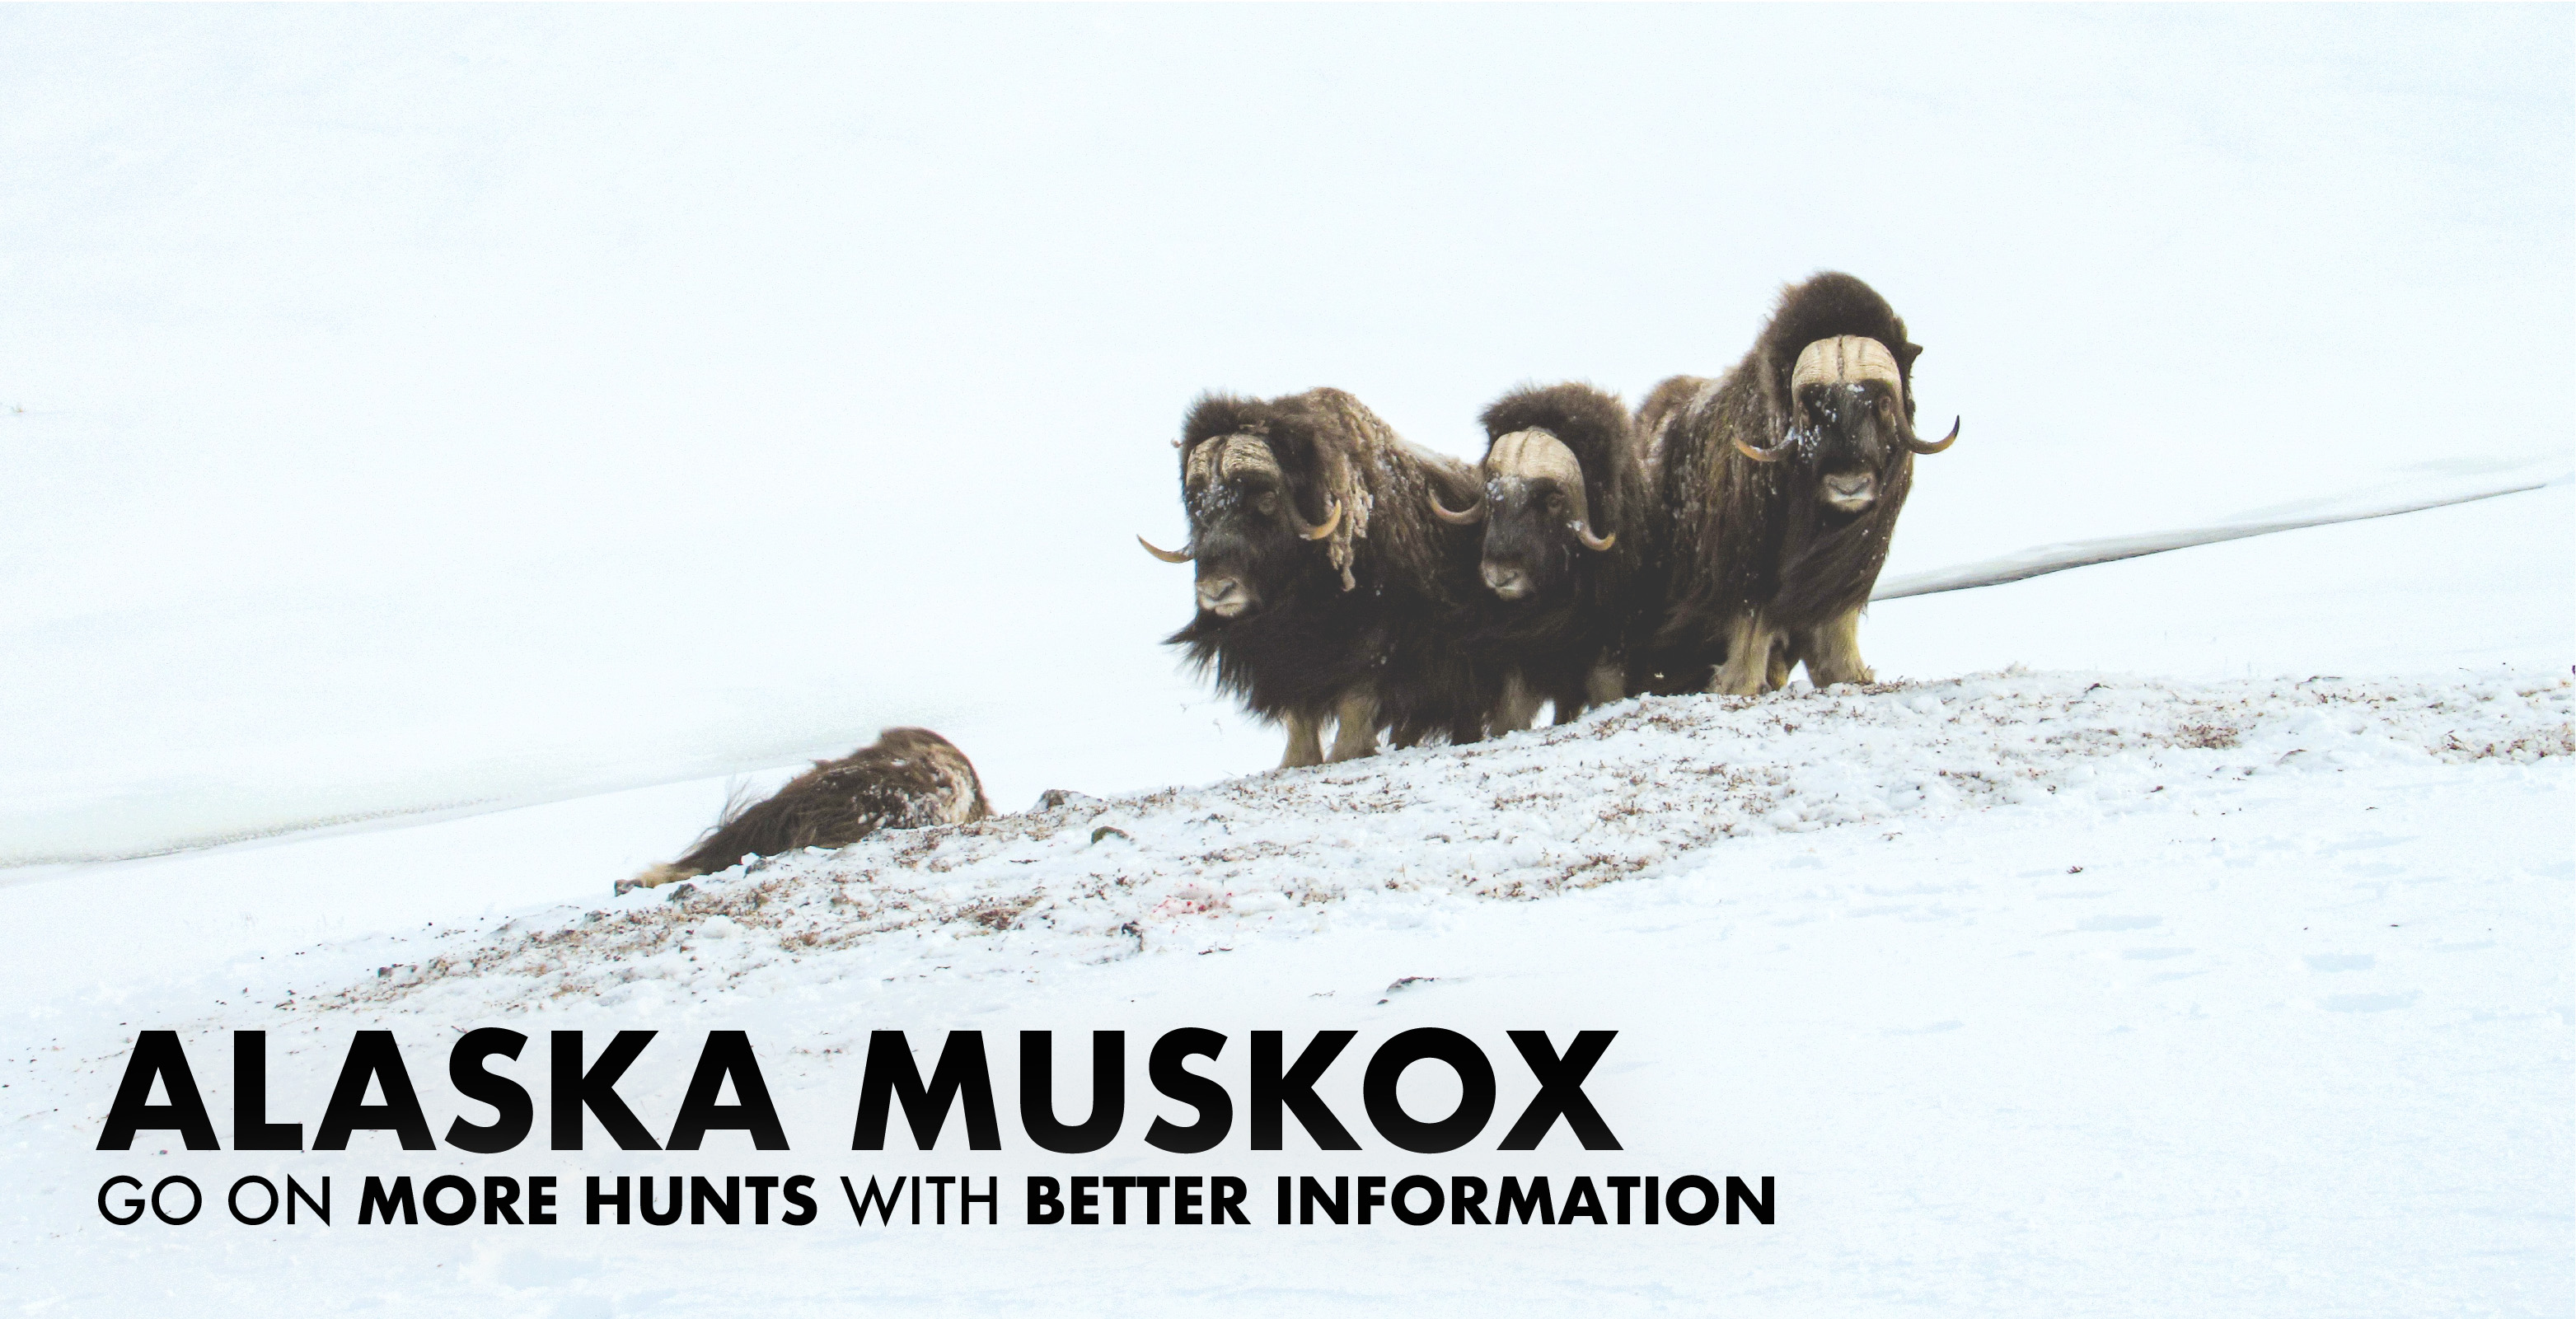 Alaska Muskox Hunting